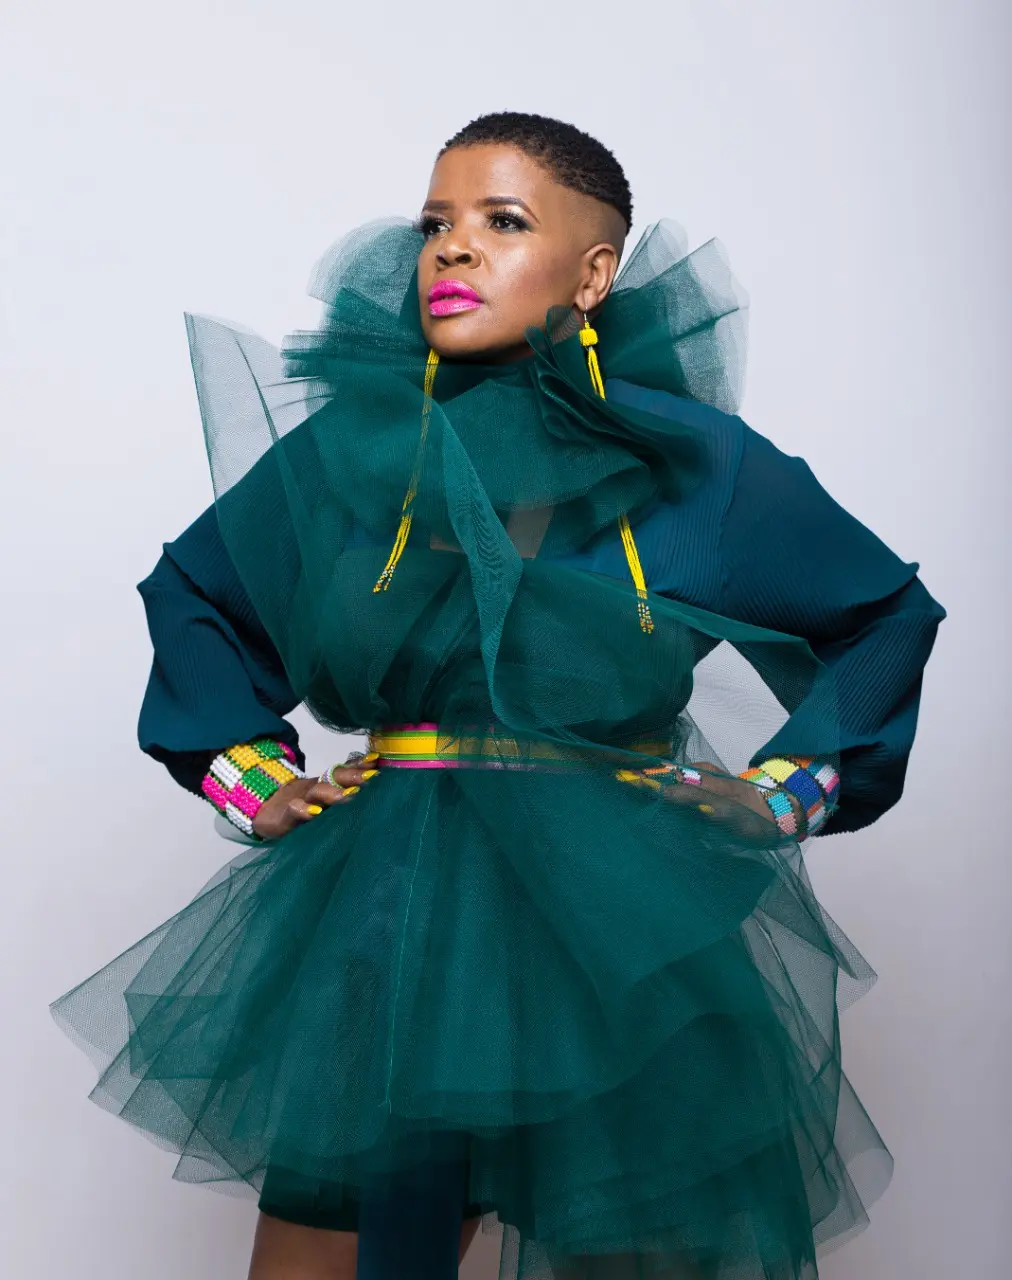 Candy Tsa Mandebele reflects on her new single